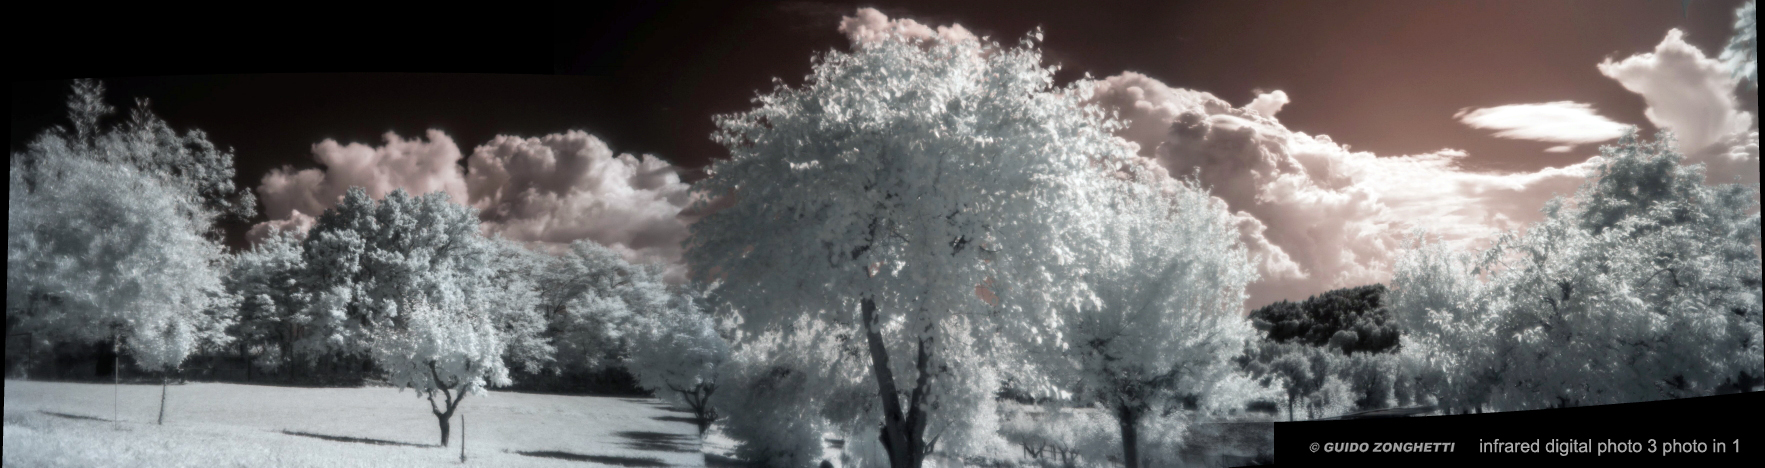 Panorama infrared